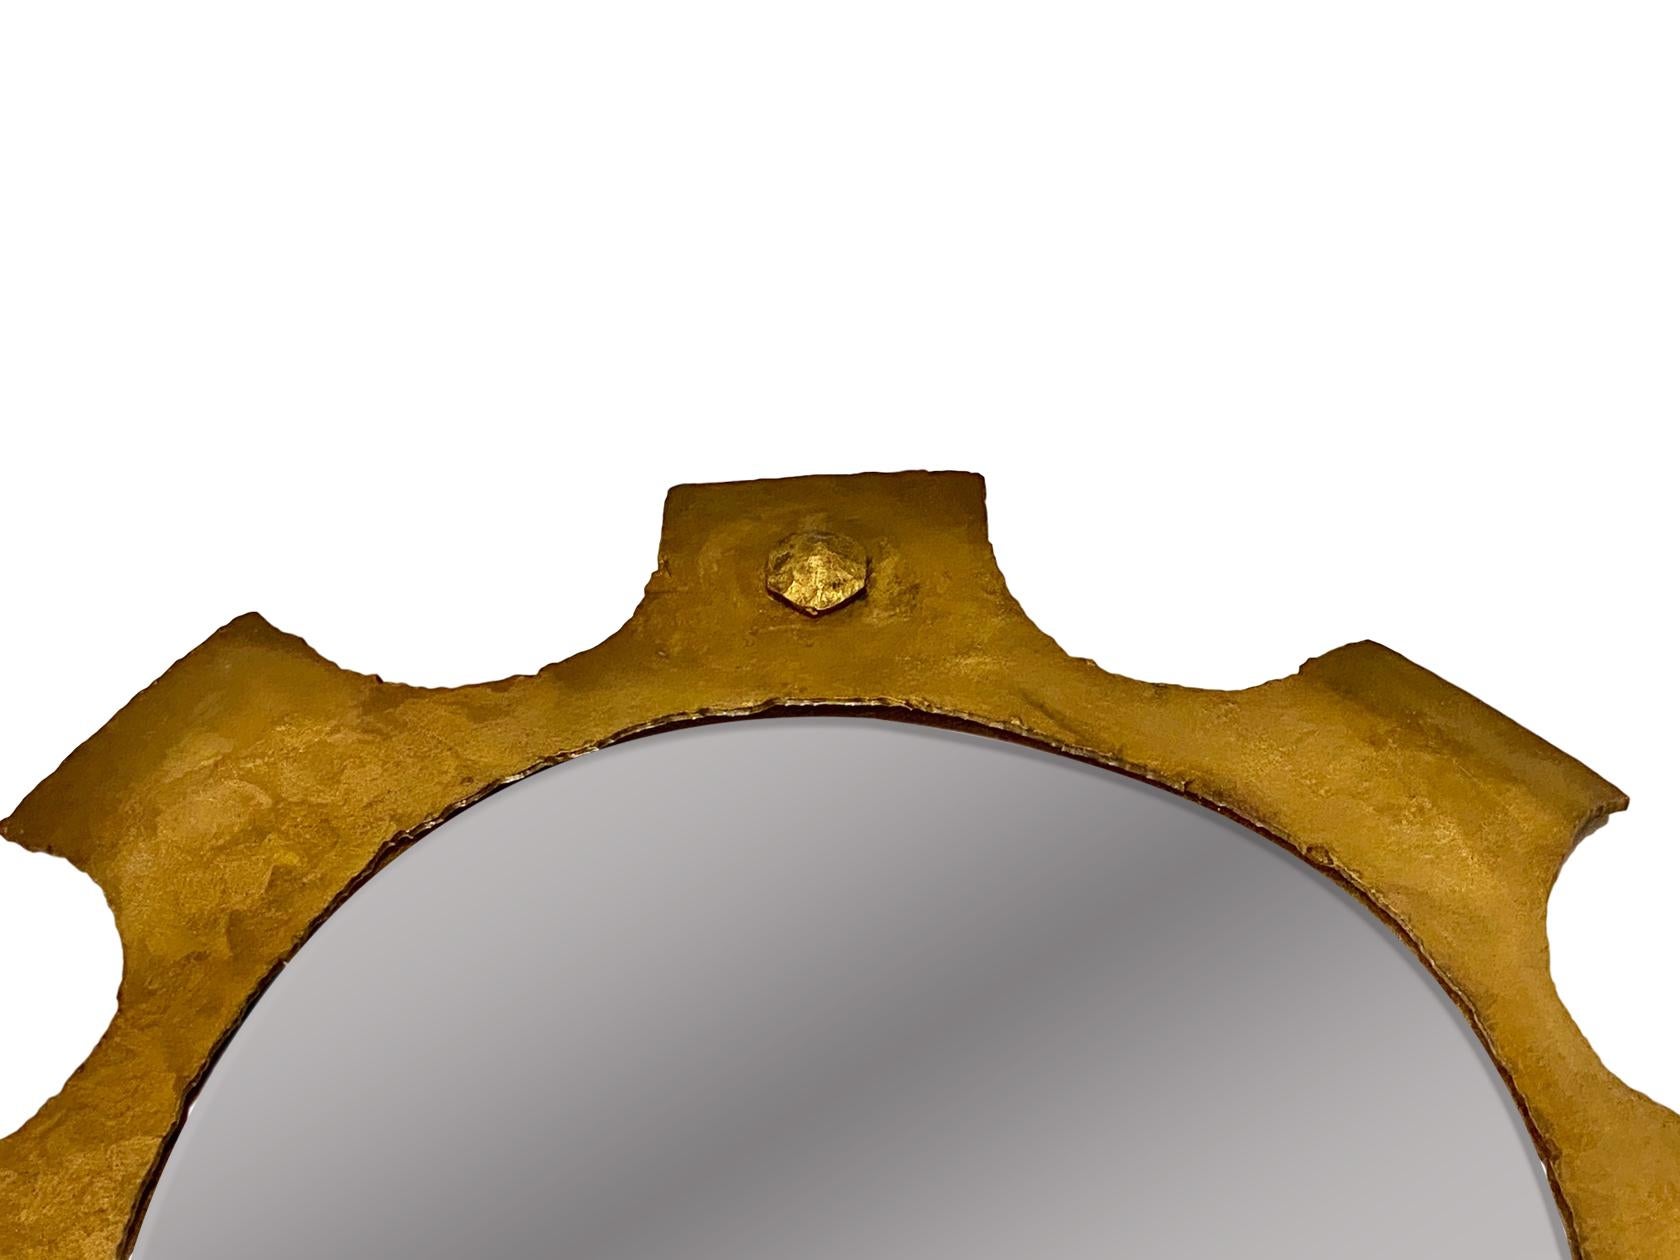 A circa 1960s Italian gilt iron Brutalist style mirror.

Measurements:
Diameter 23.5?
Depth 1?.